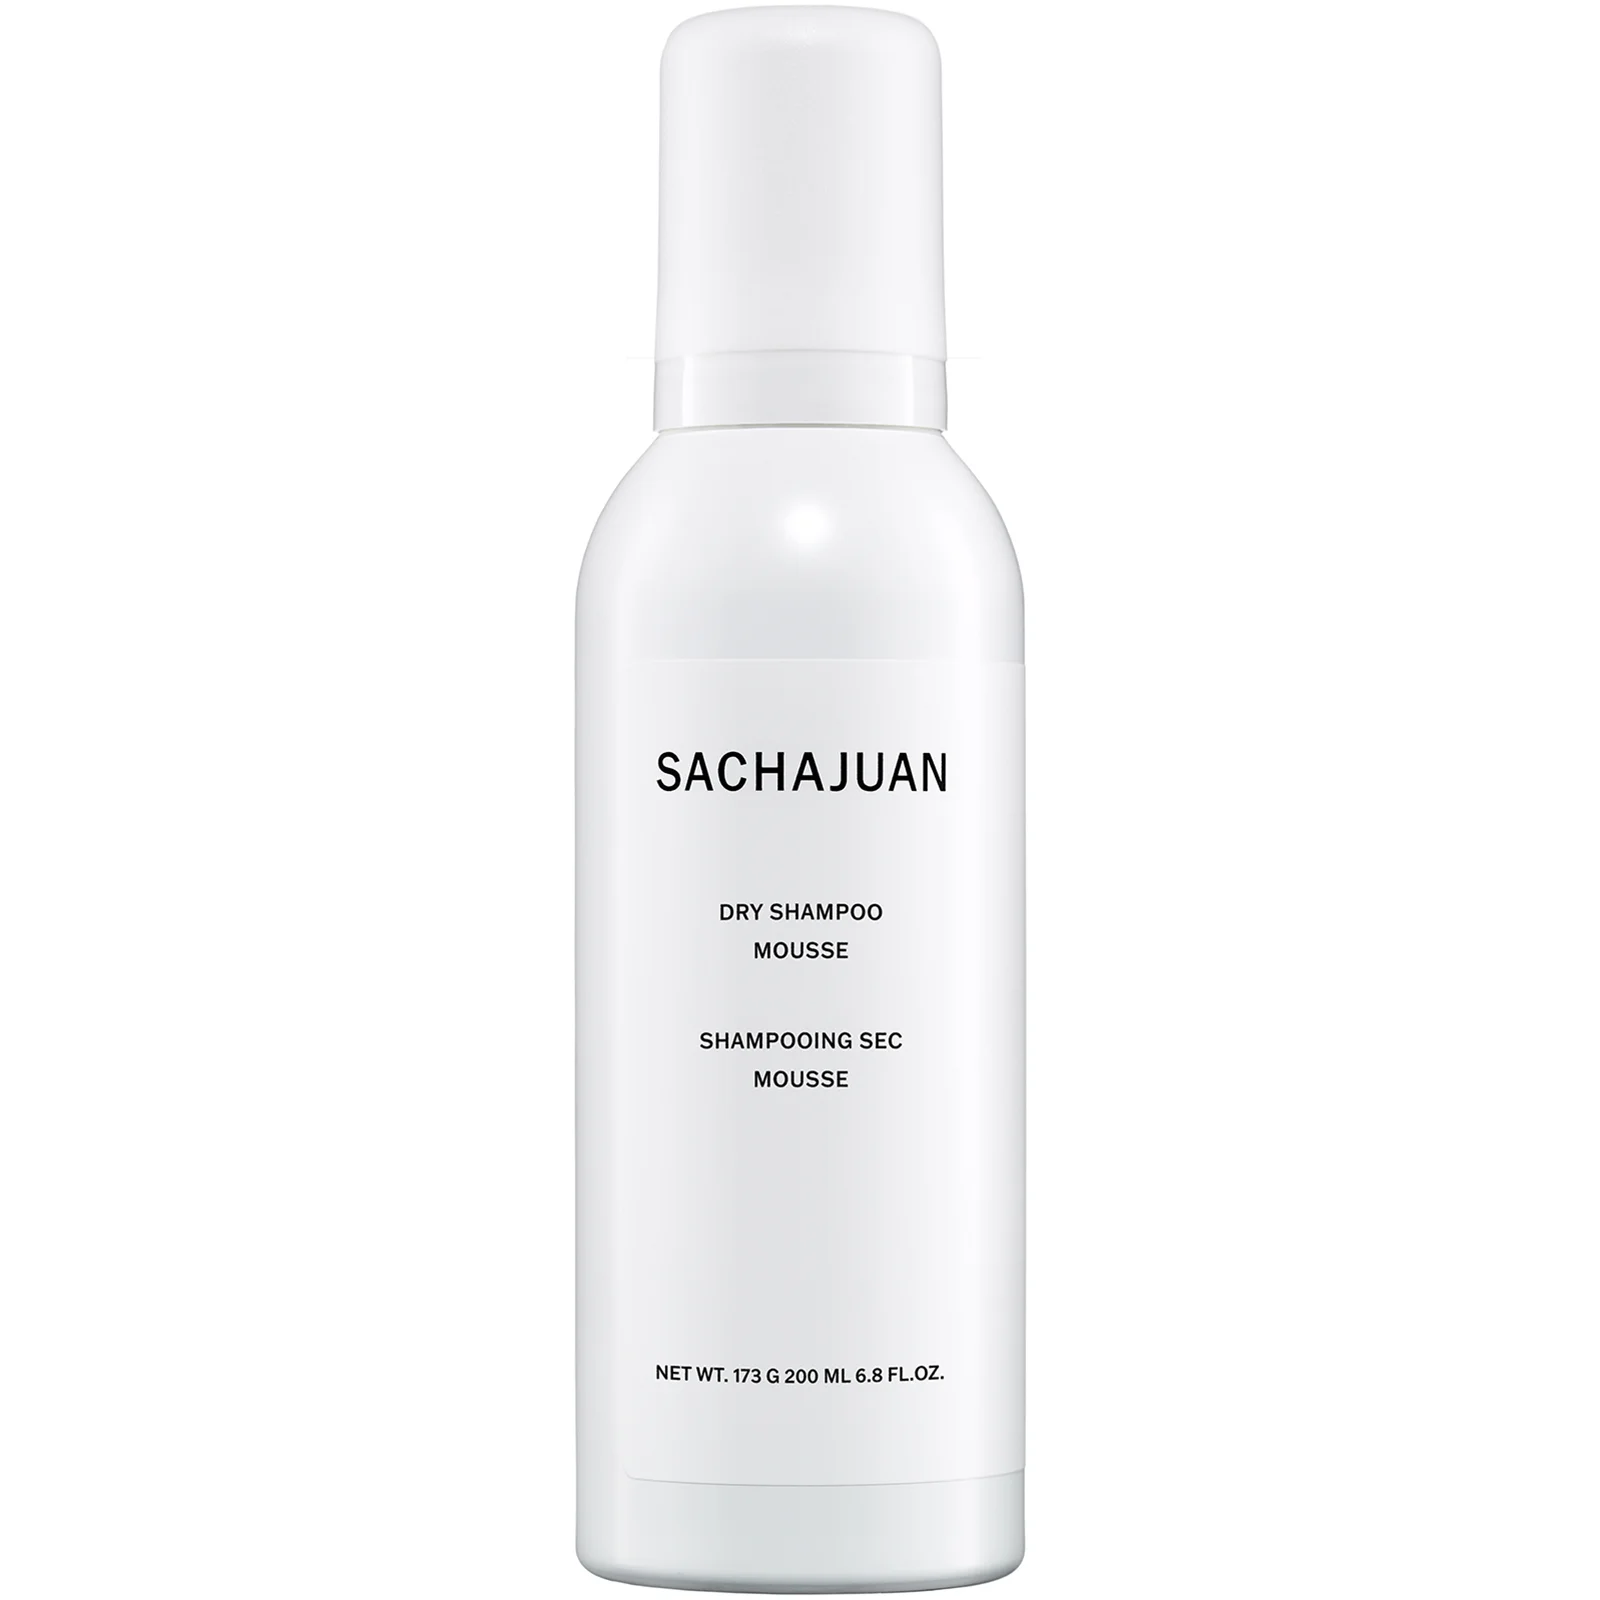 Sachajuan Dry Shampoo Mousse 200ml Image 1